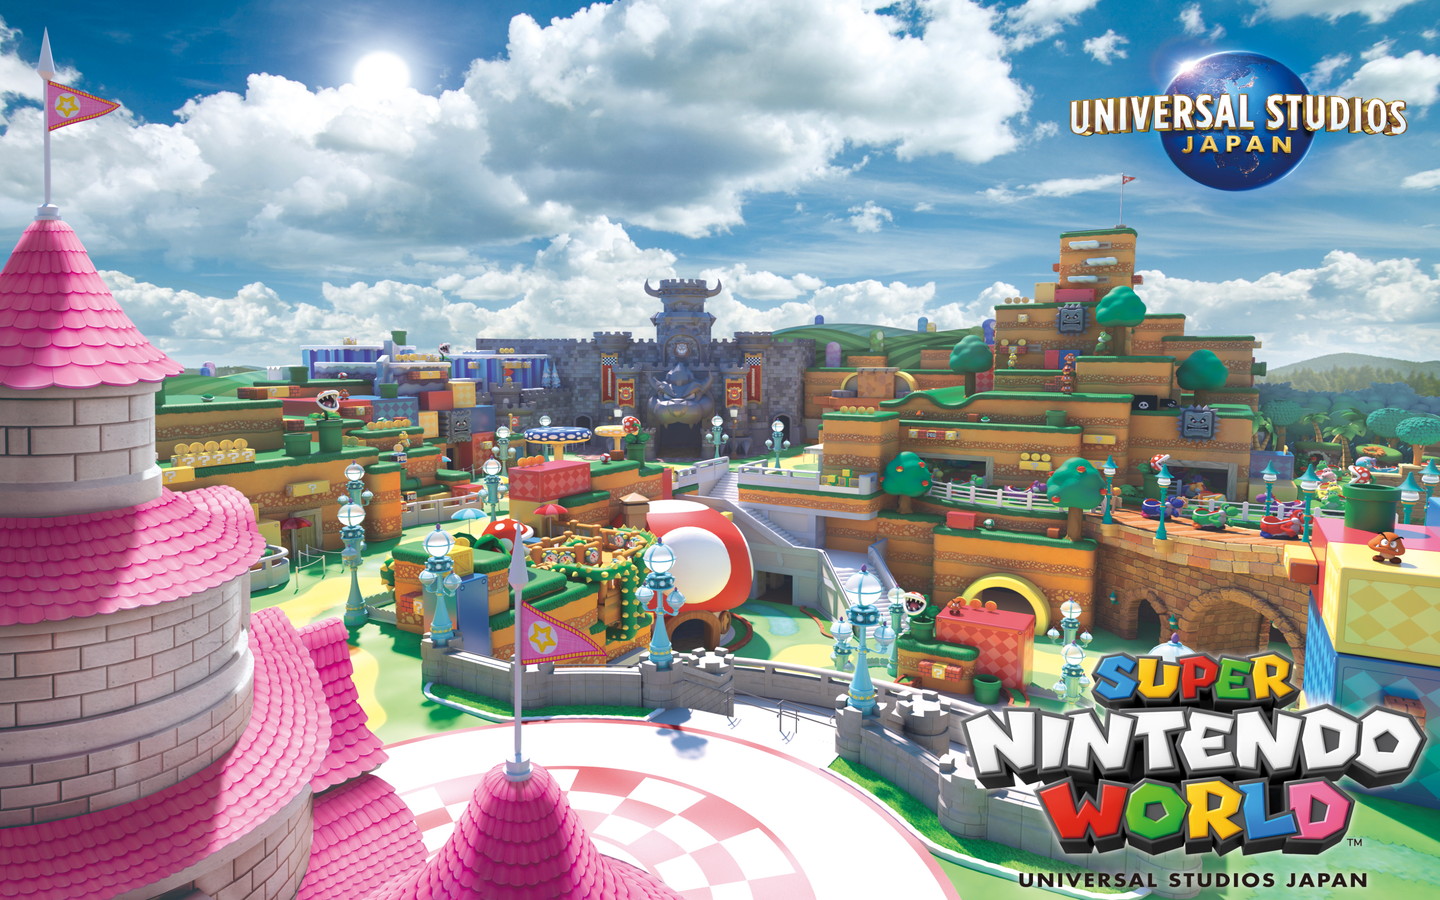 Usj 世界初 任天堂 のテーマエリア Super Nintendo World の新ビジュアルを公開